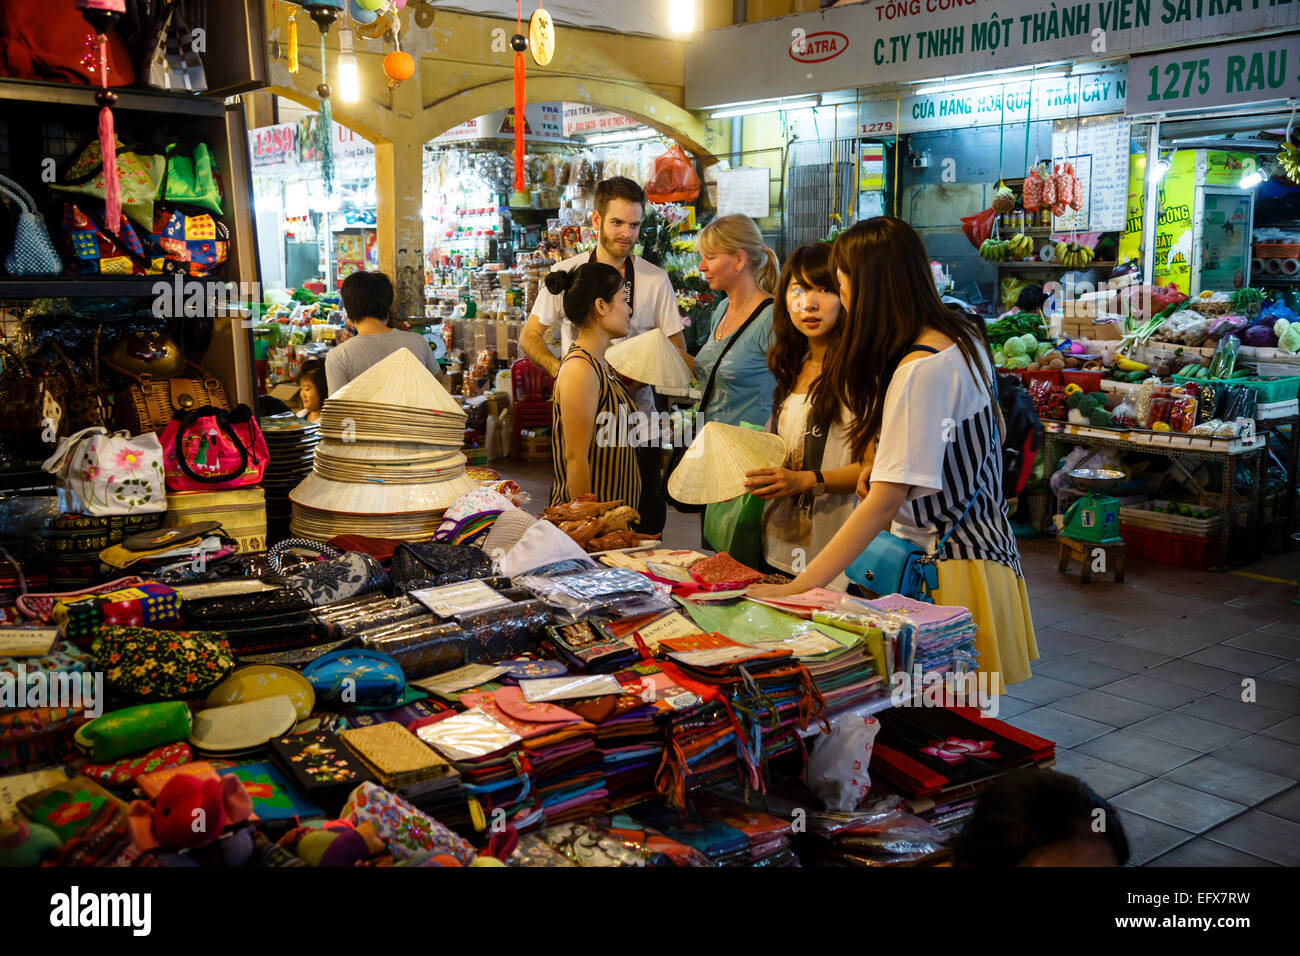 Ben Thanh Market, Ho Chi Minh City (Saigon), Vietnam. Stock Photo